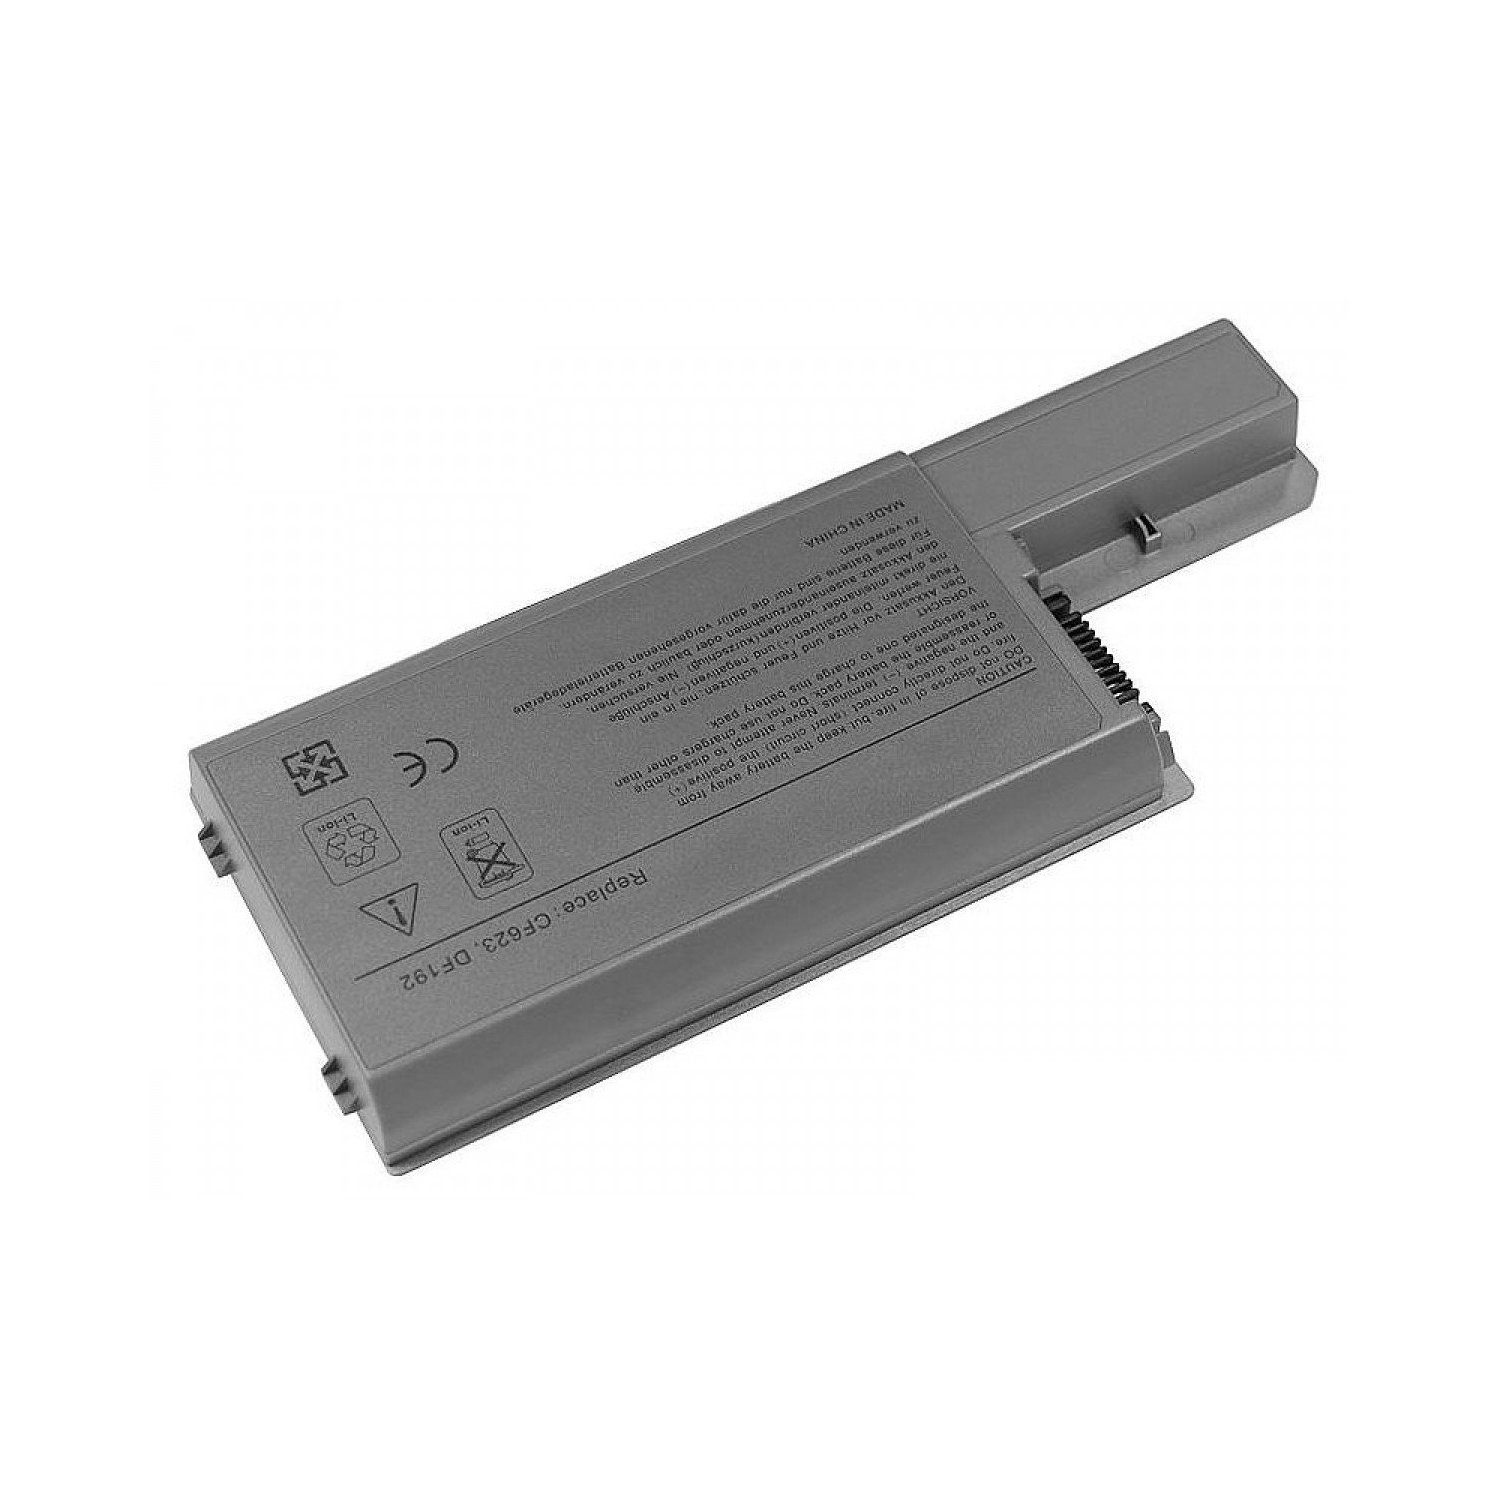 Dell-D820: Laptop Battery 6-cell for Dell Latitude D820 D830 D531 D531N Precision M65 M4300 M4300 CF623 YD623